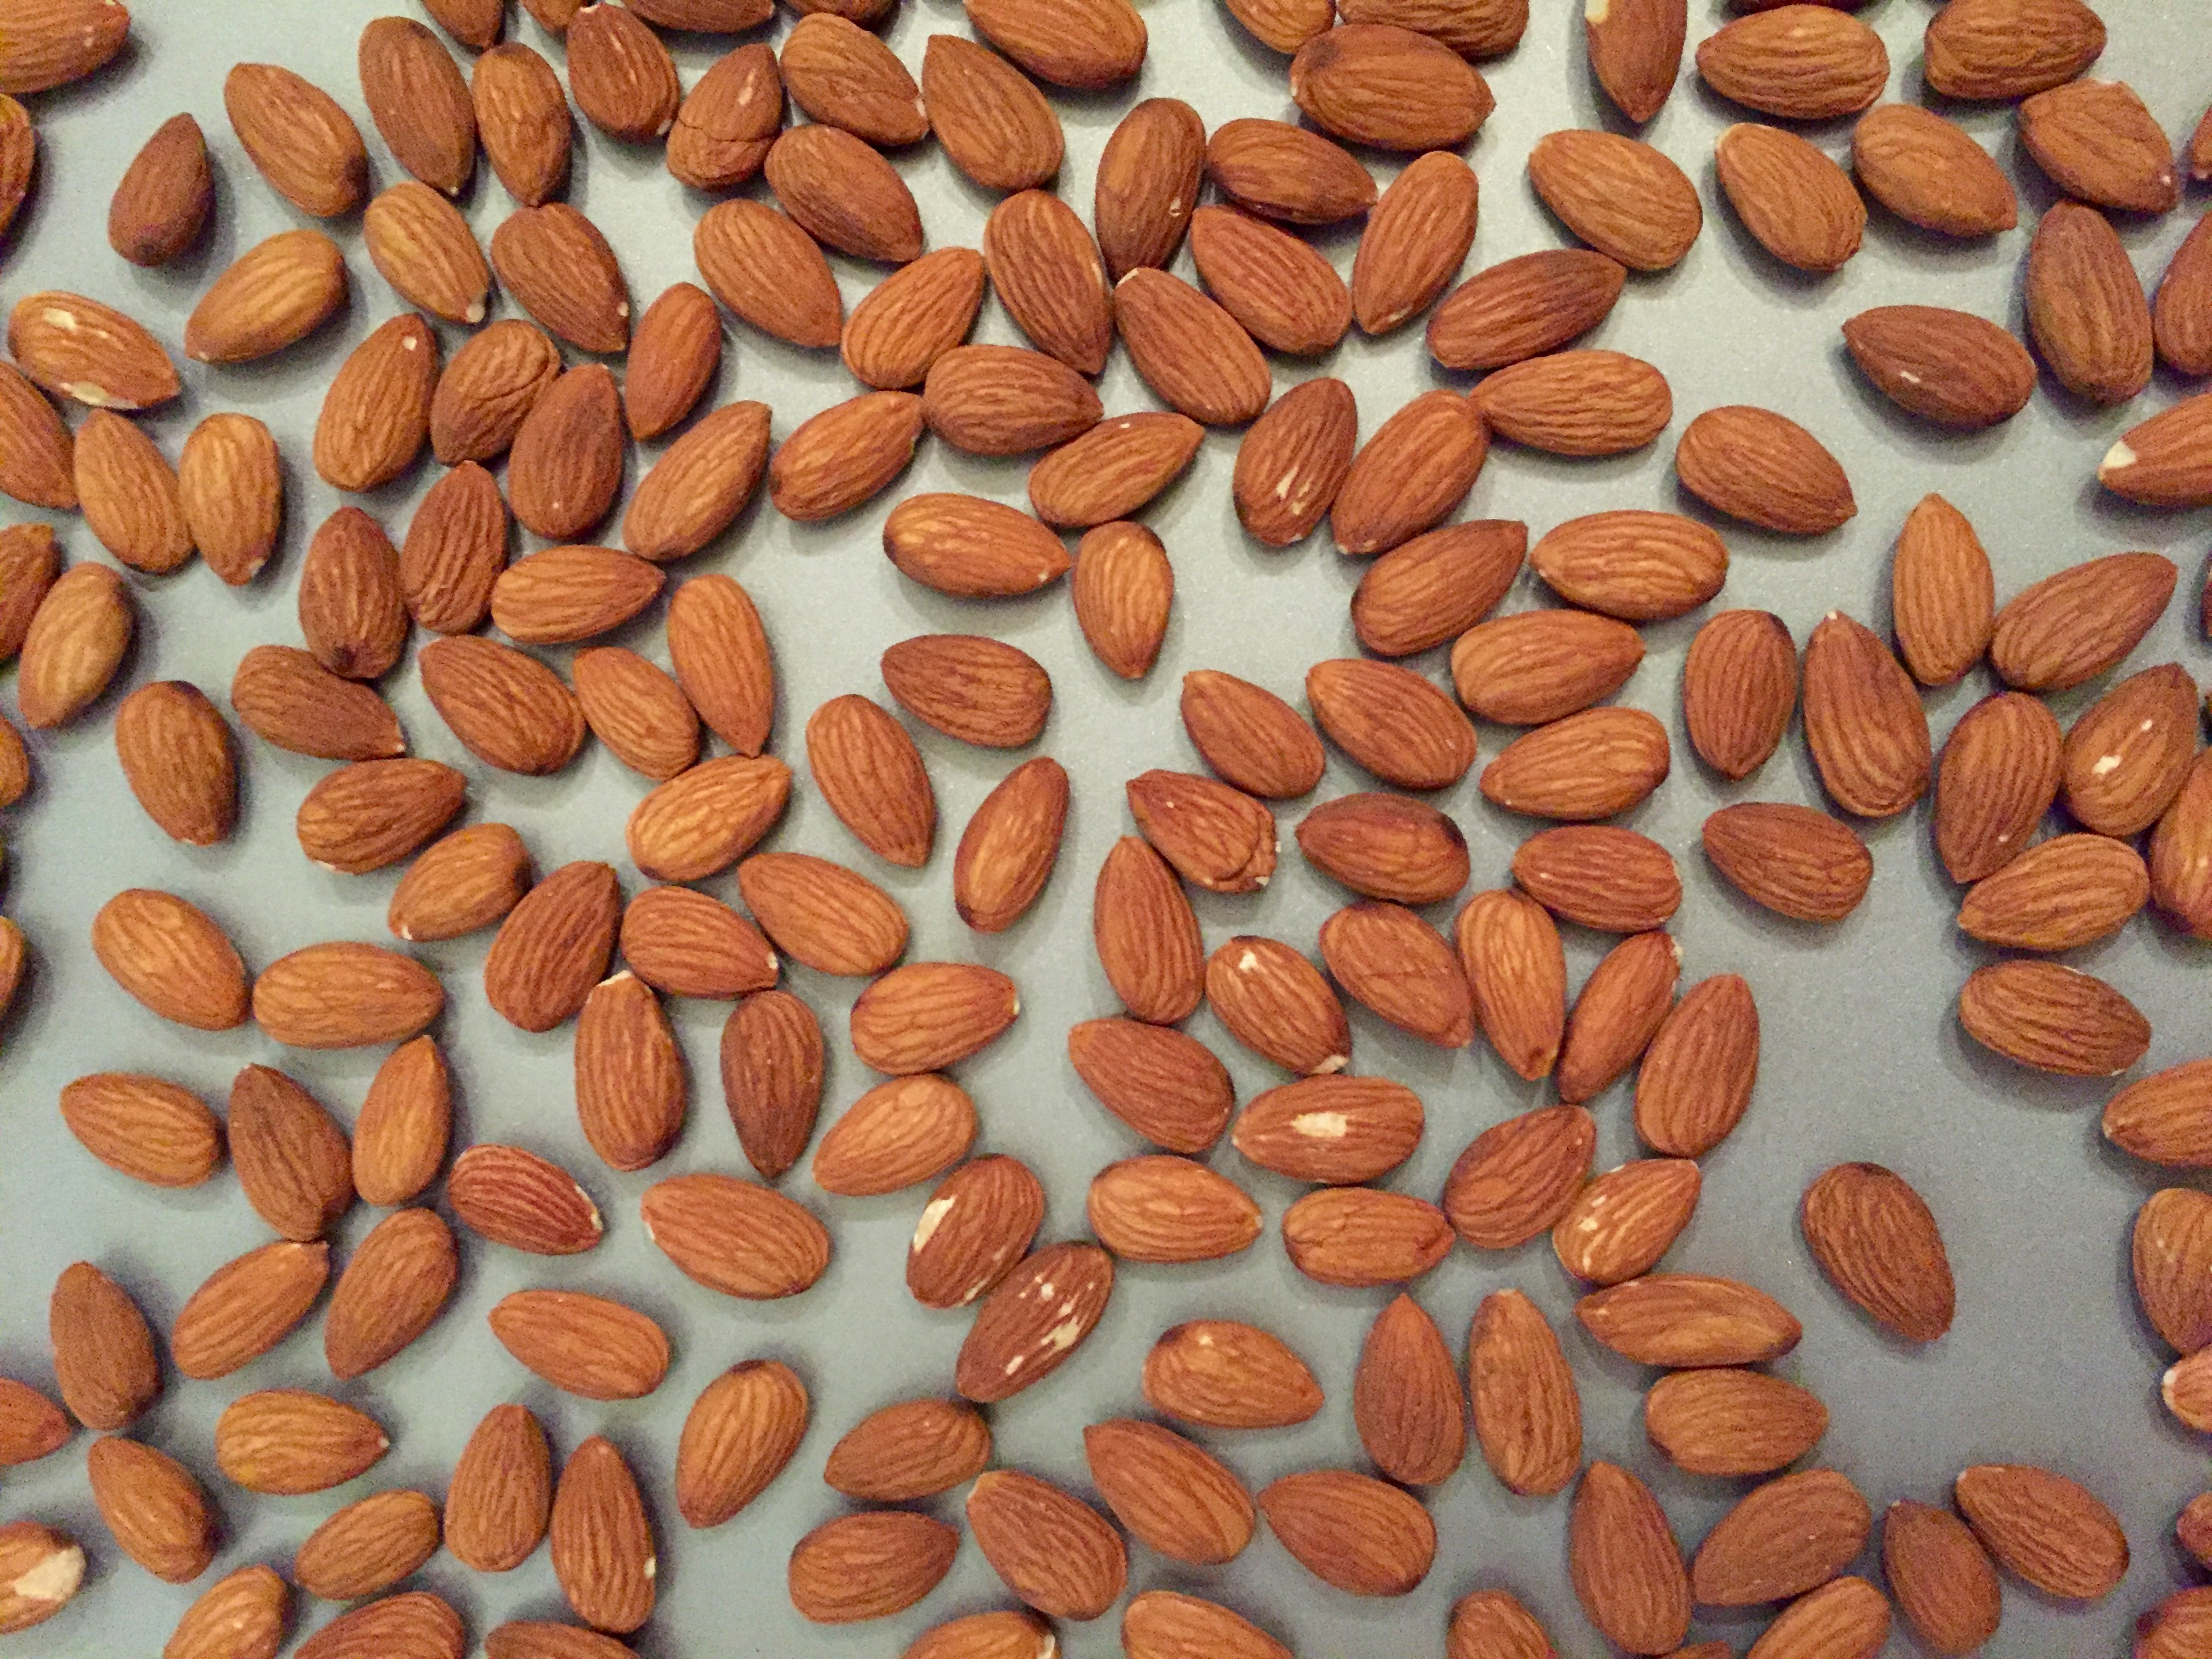 Almonds on a baking sheet.